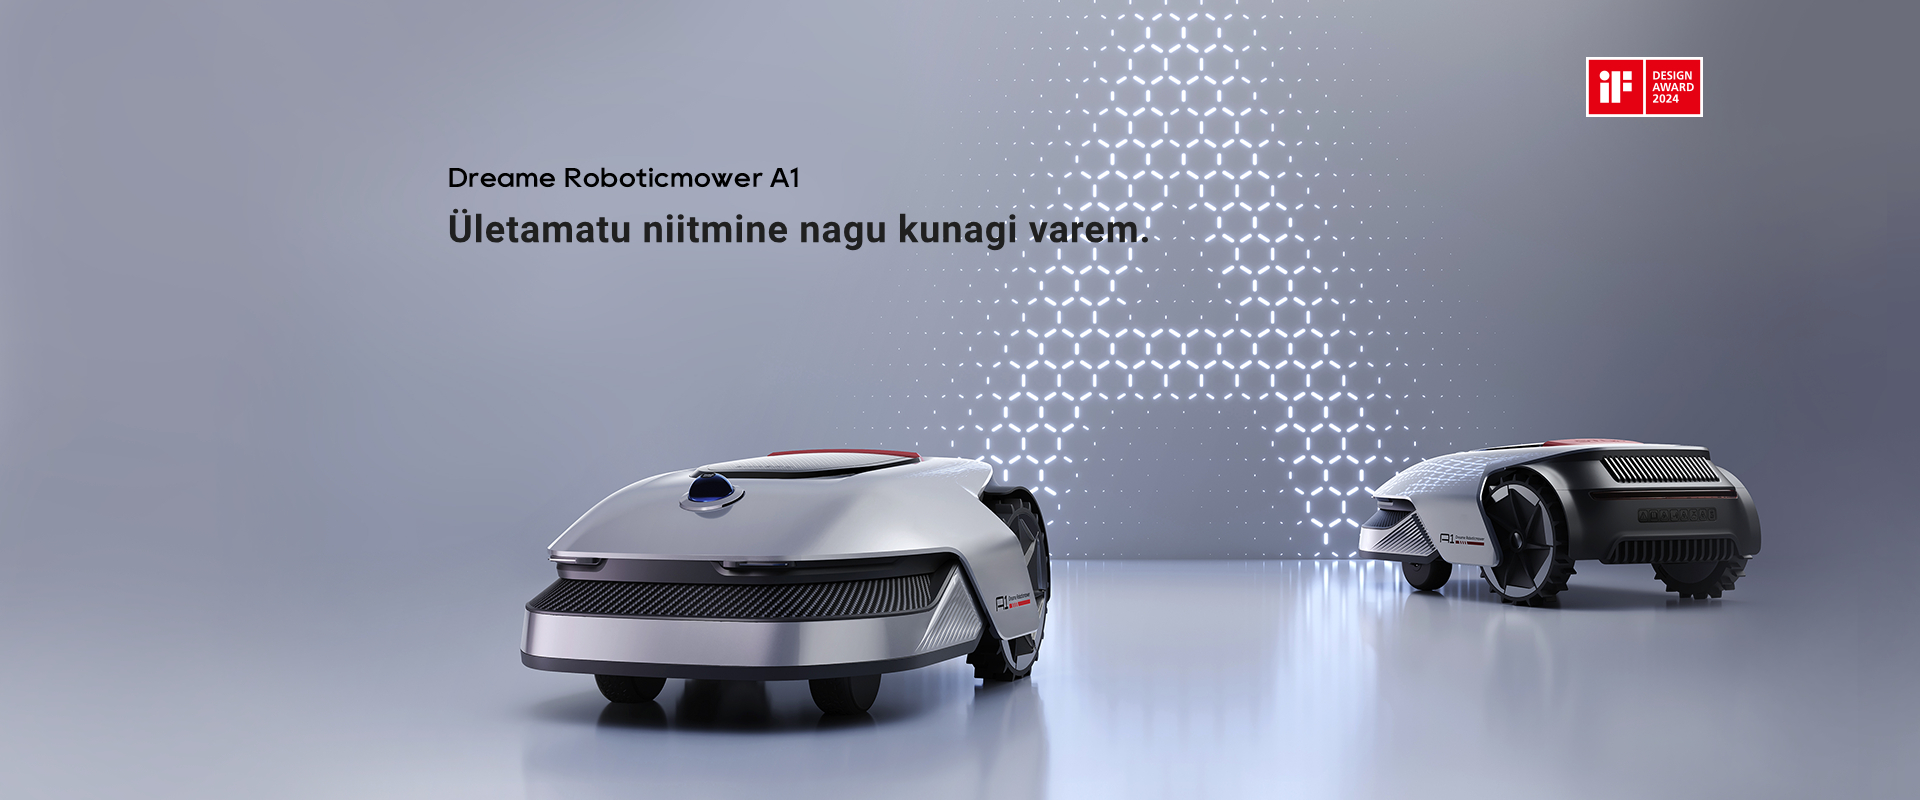 Dreame Roboticmower A1